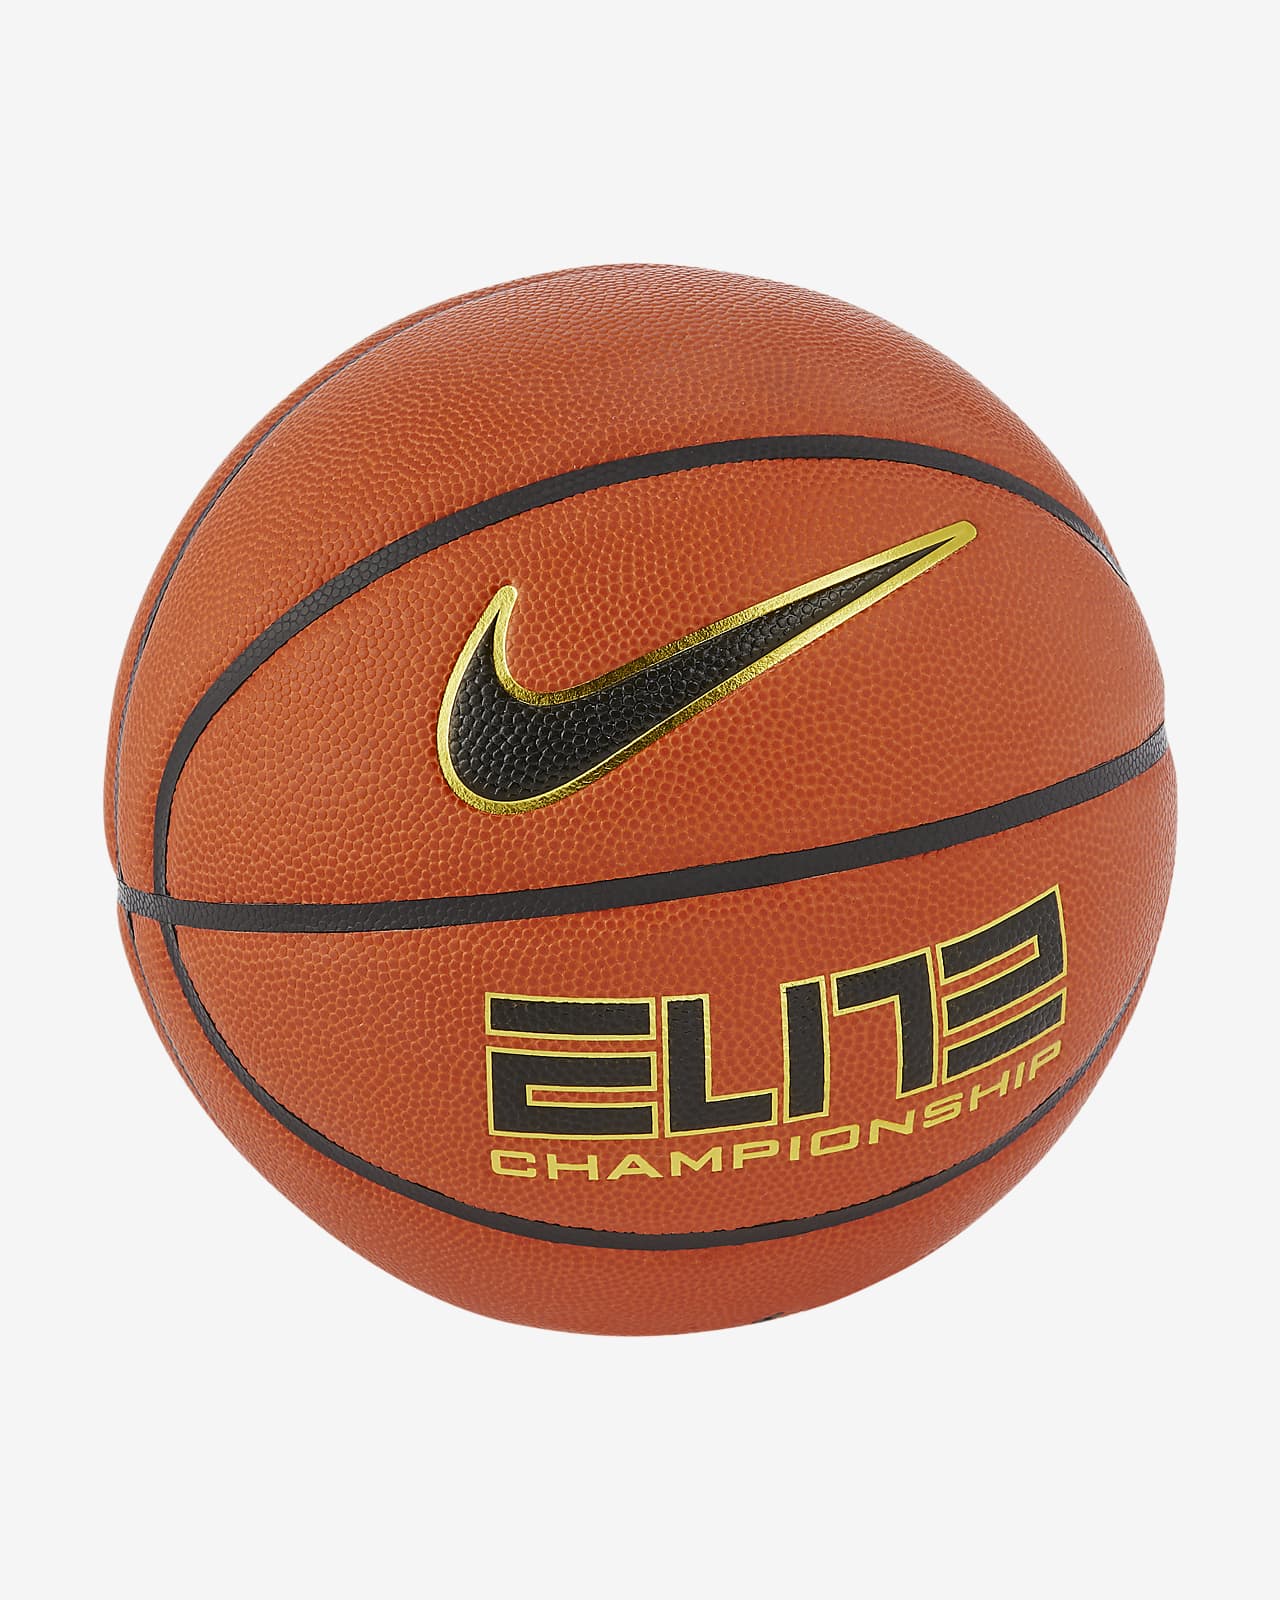 Negociar Delincuente trapo Balón de básquetbol Nike Elite Championship 8P. Nike.com